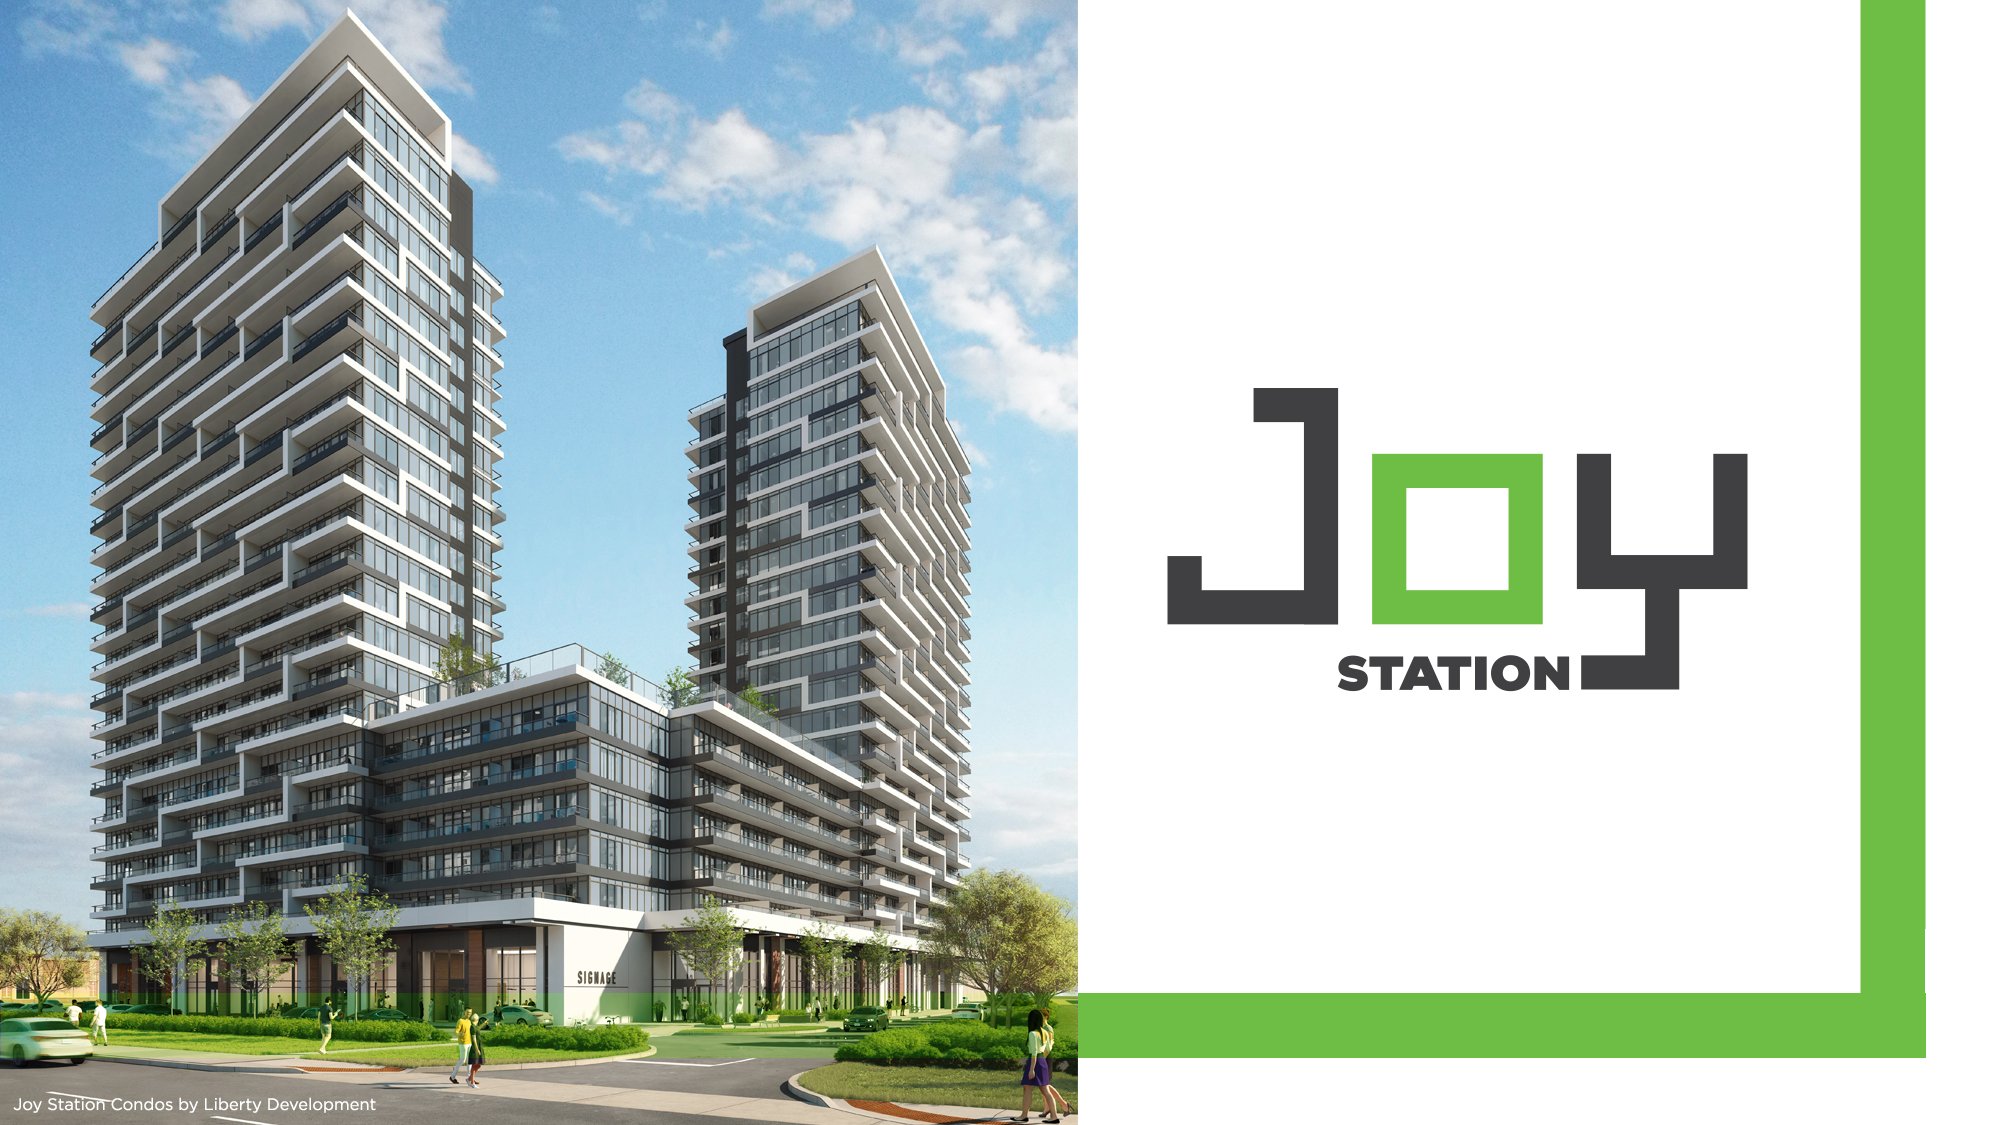 Joy Station Condos - Exterior Rendering by Liberty Development